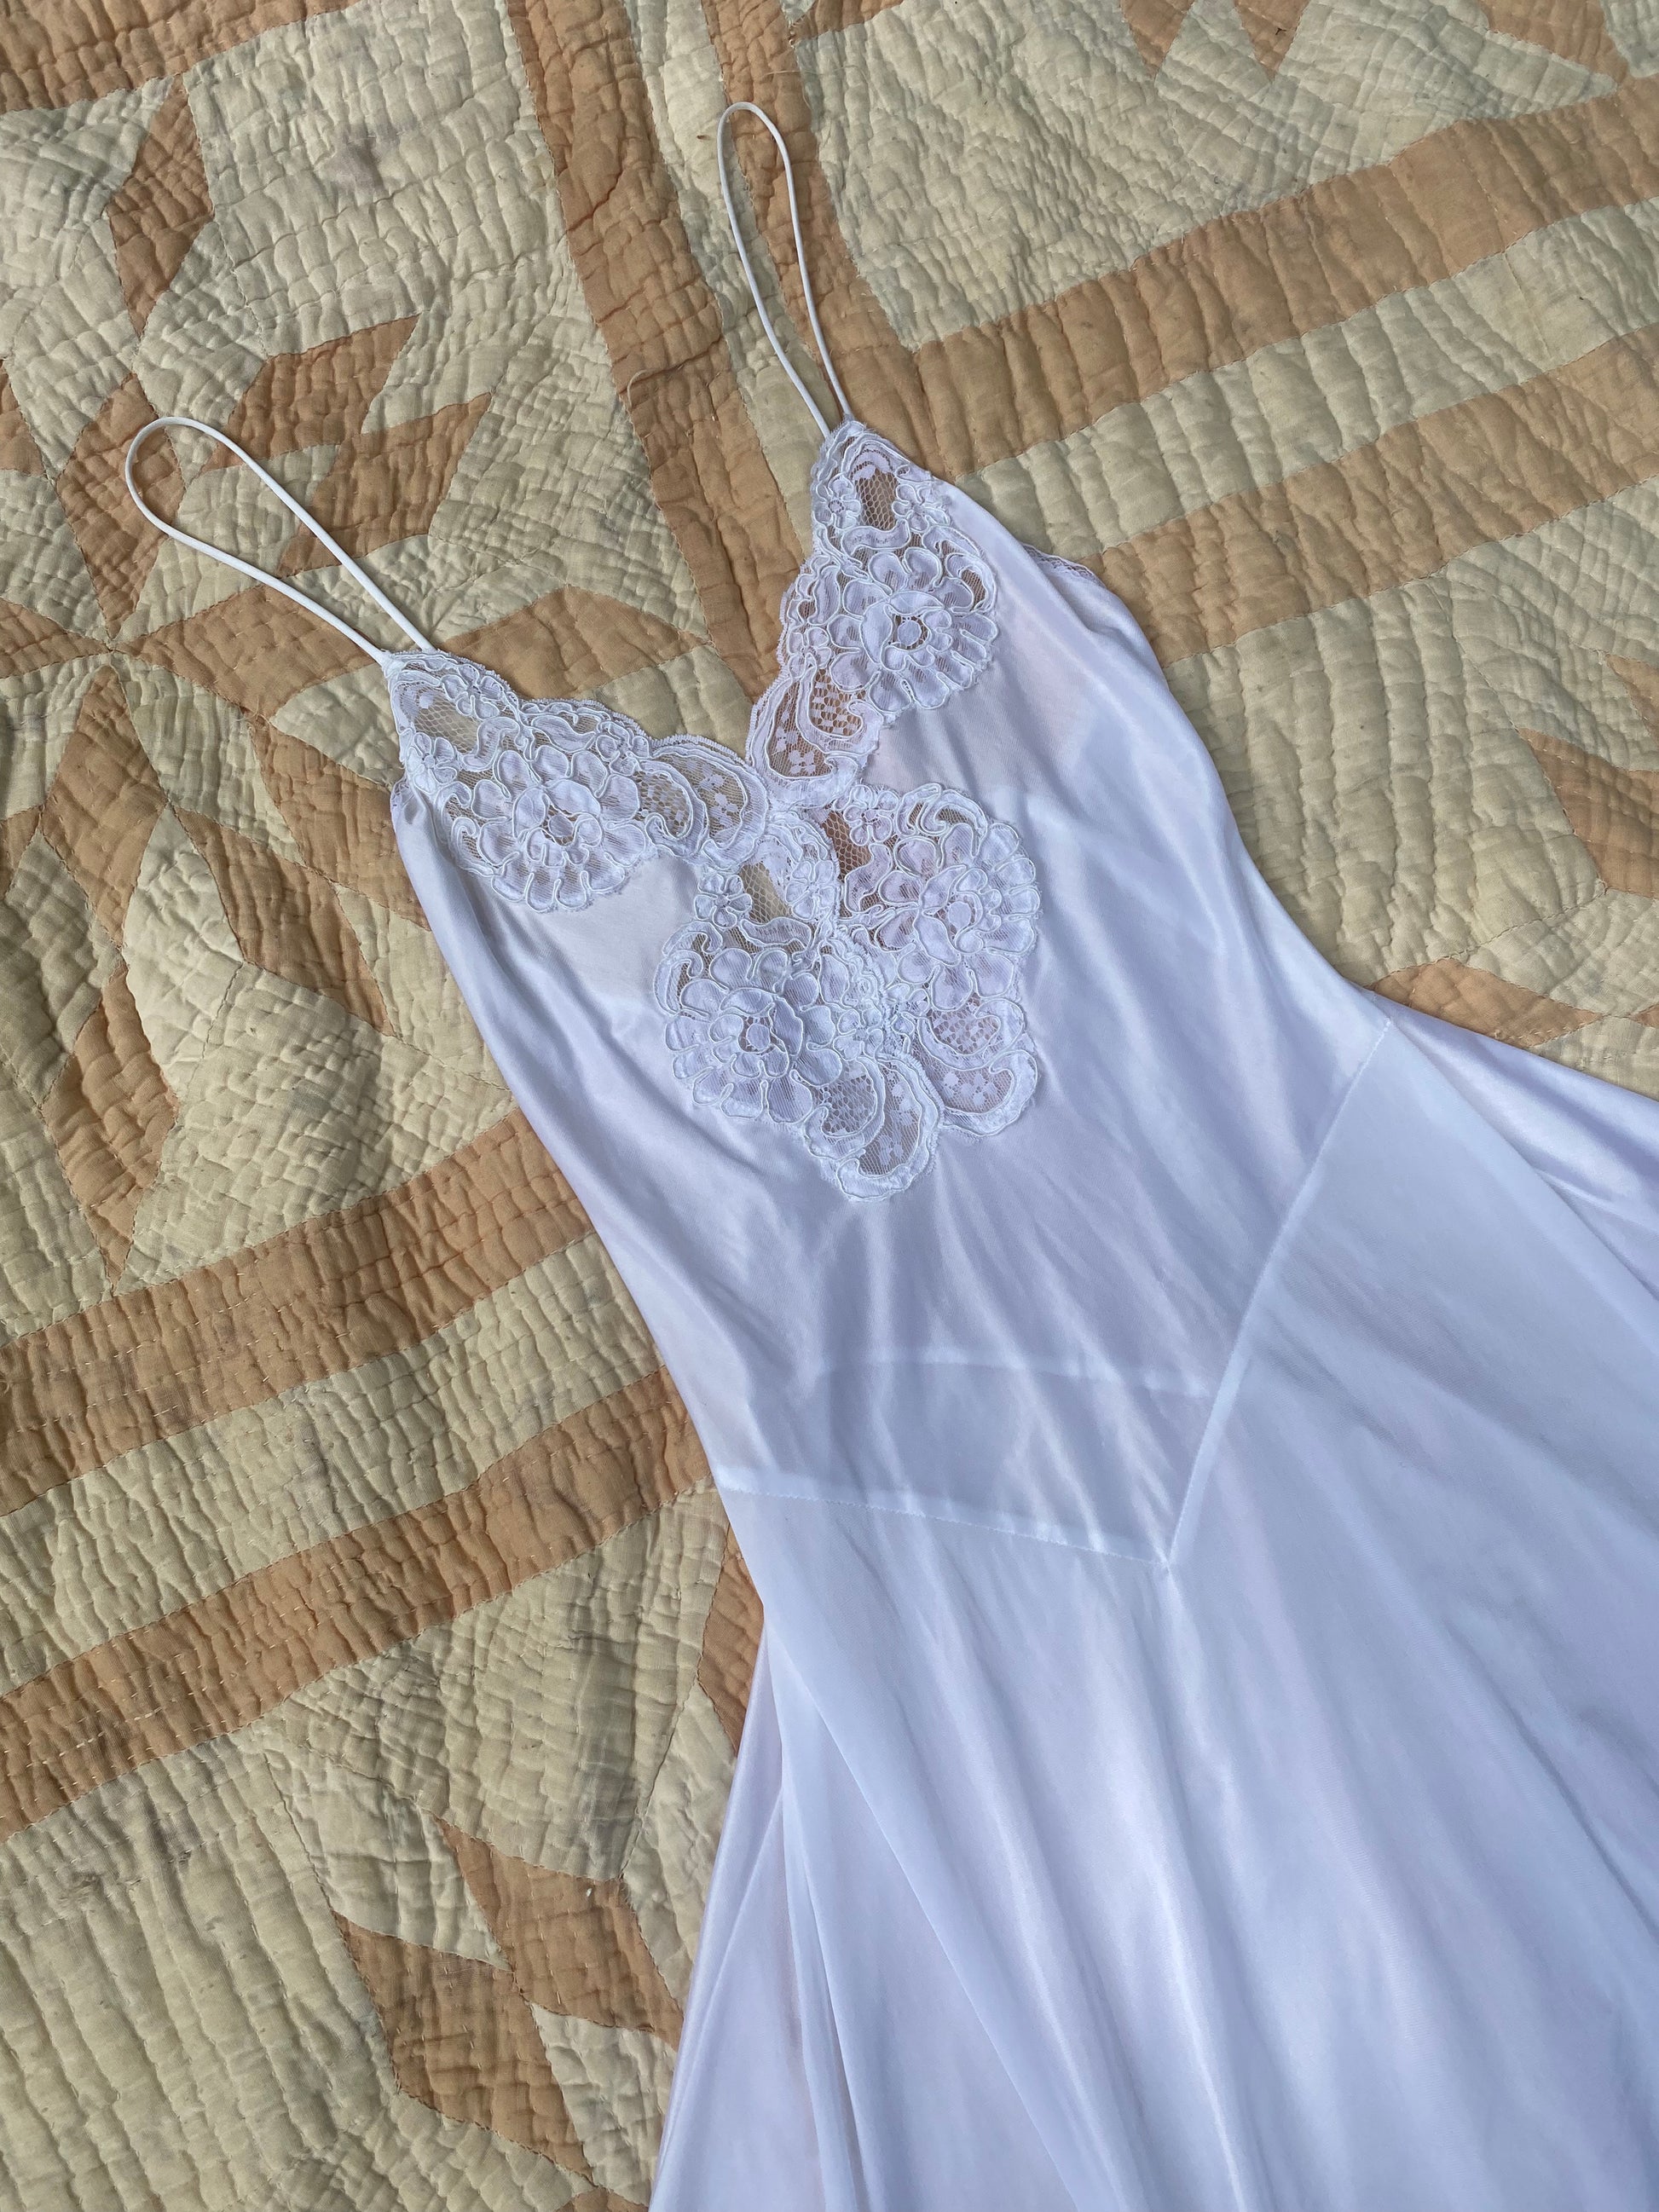 White Bridal Robe and Nightgown Set Peignoir Set Bridal Lingerie